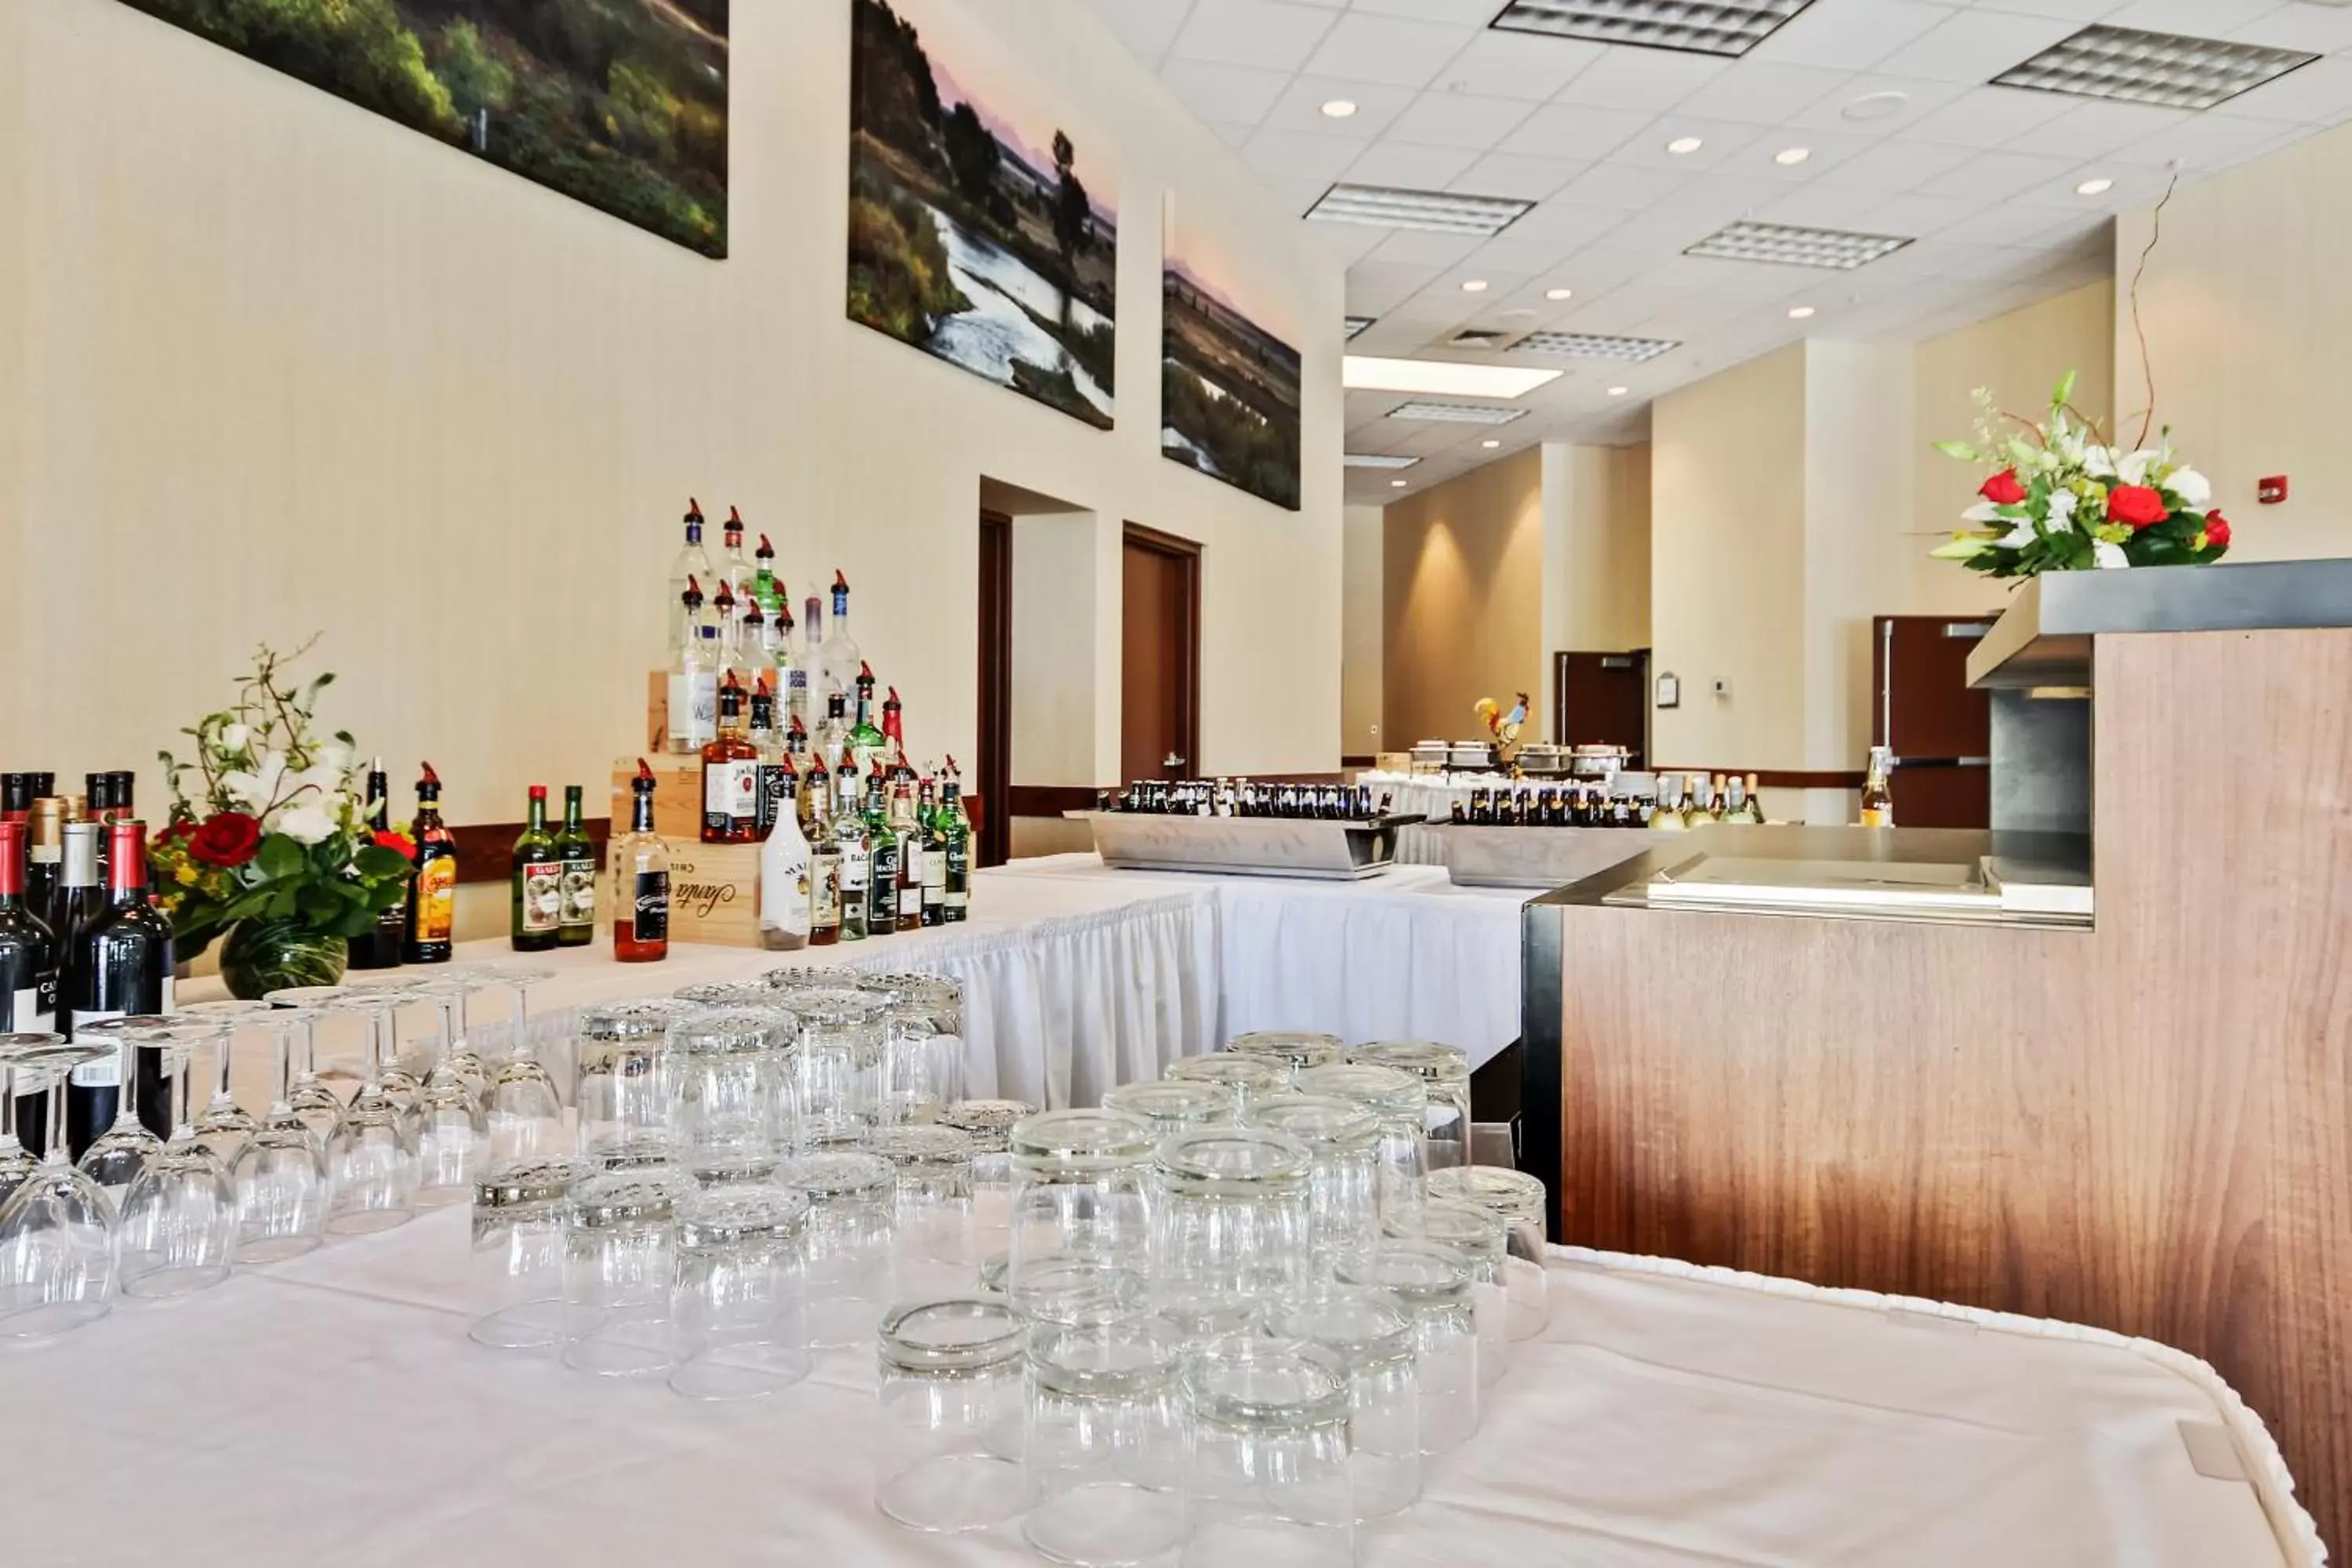 Banquet/Function facilities, Banquet Facilities in Best Western Plus GranTree Inn